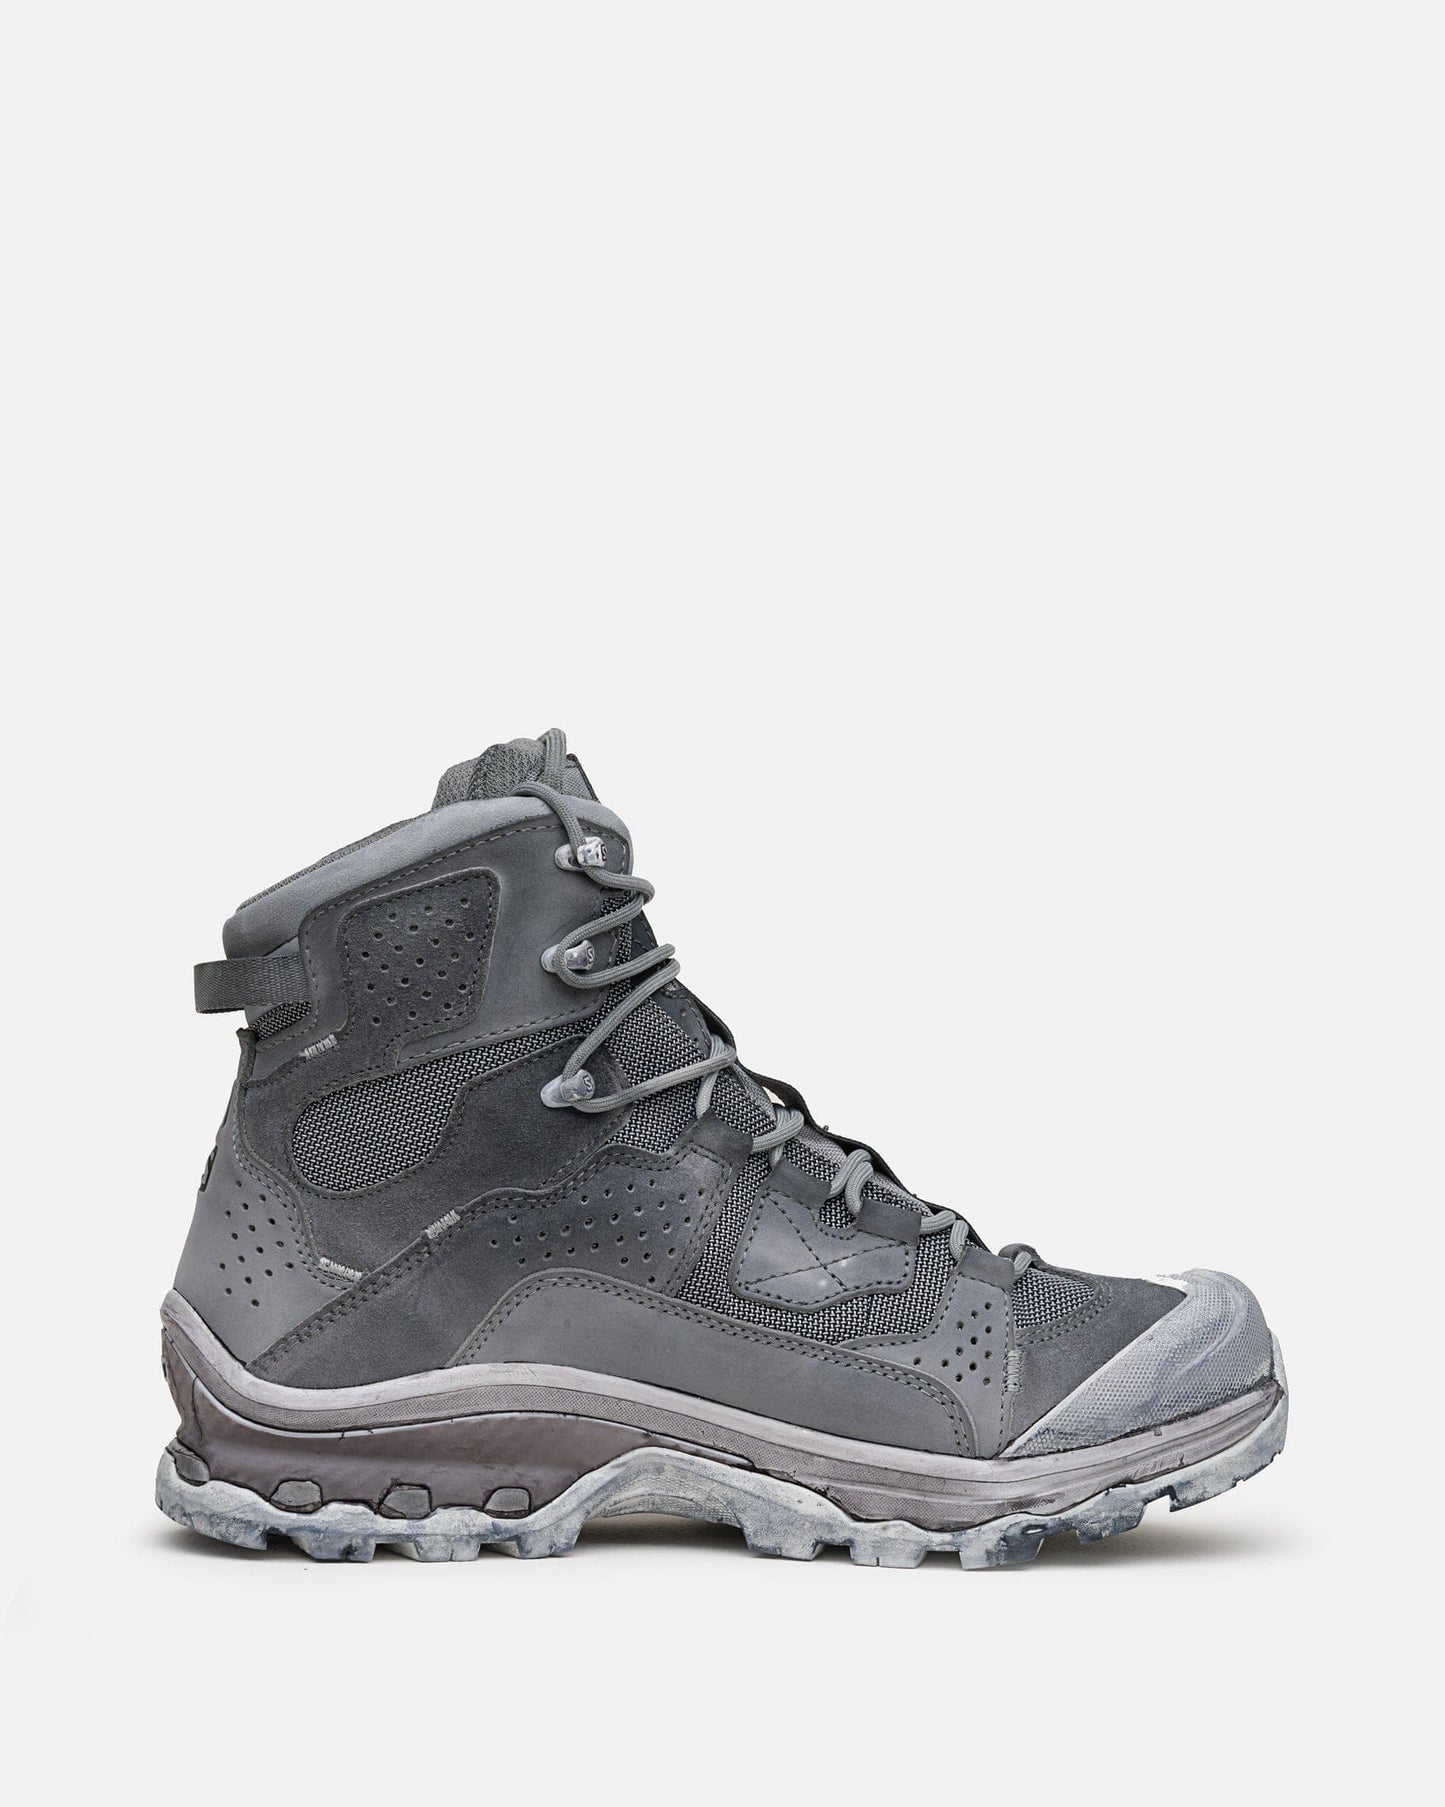 Boot2 GTX in Grey –